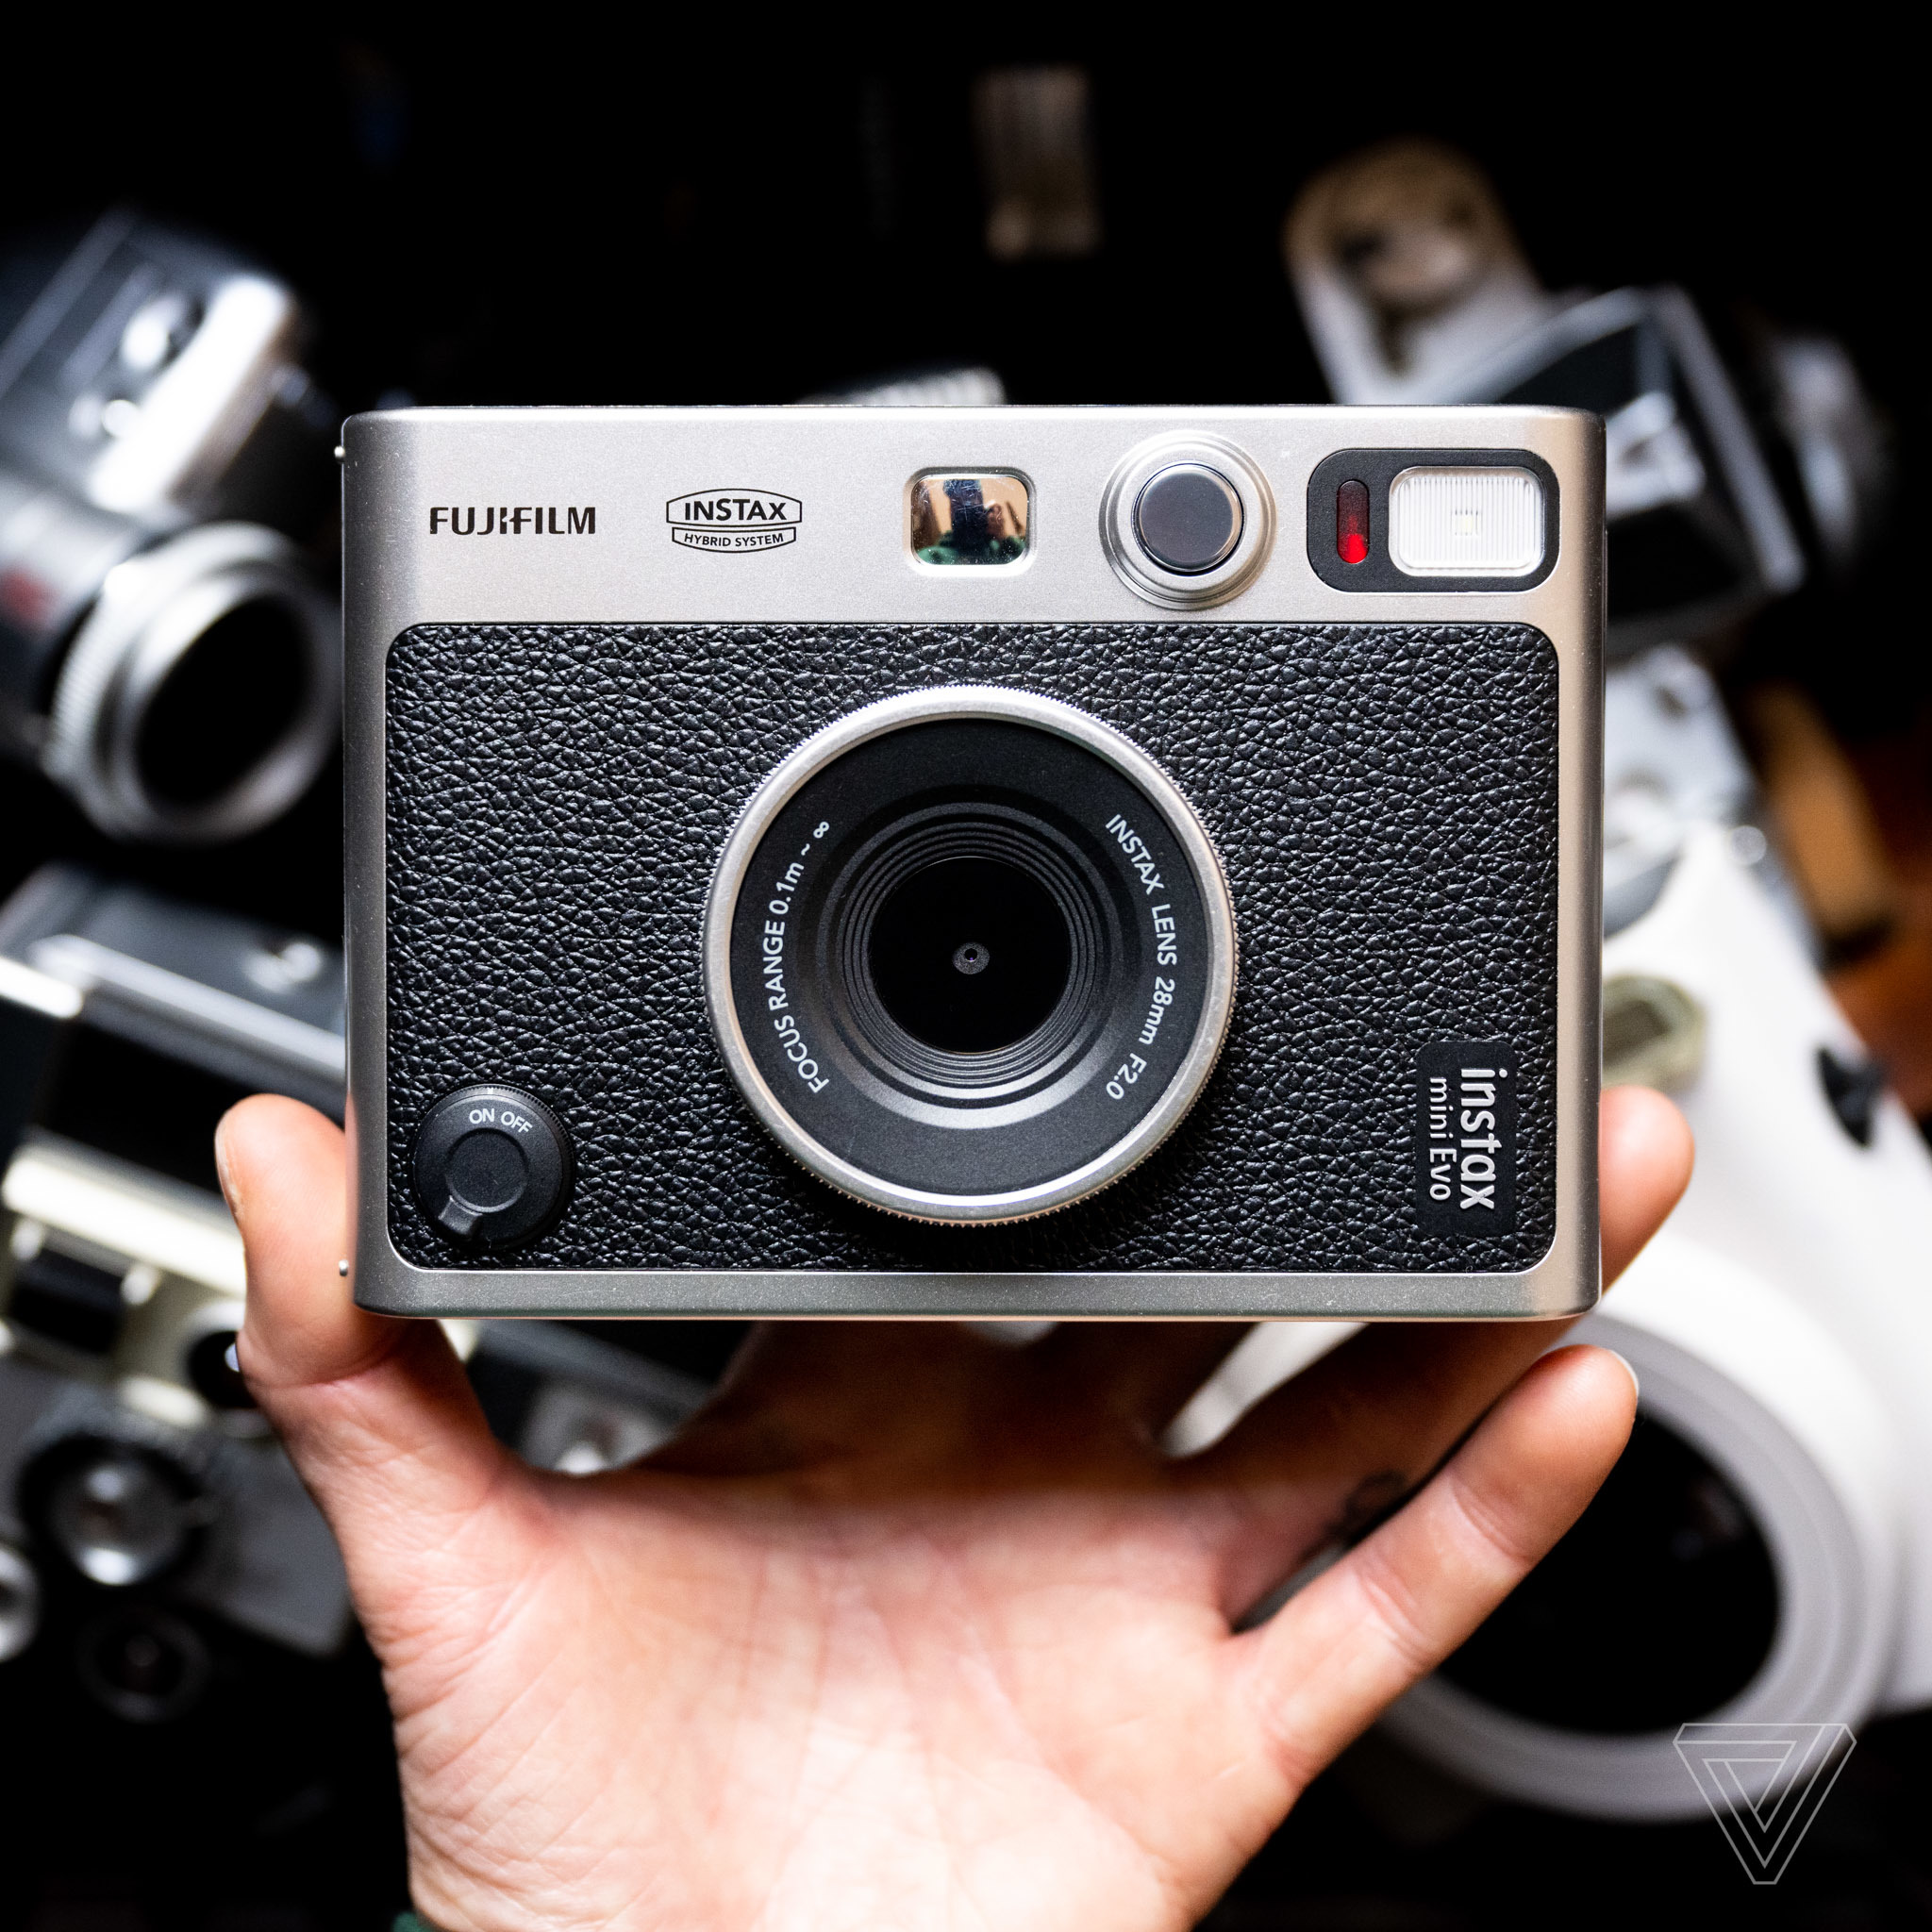 Fujifilm Instax Mini Evo more camera than toy - The Verge